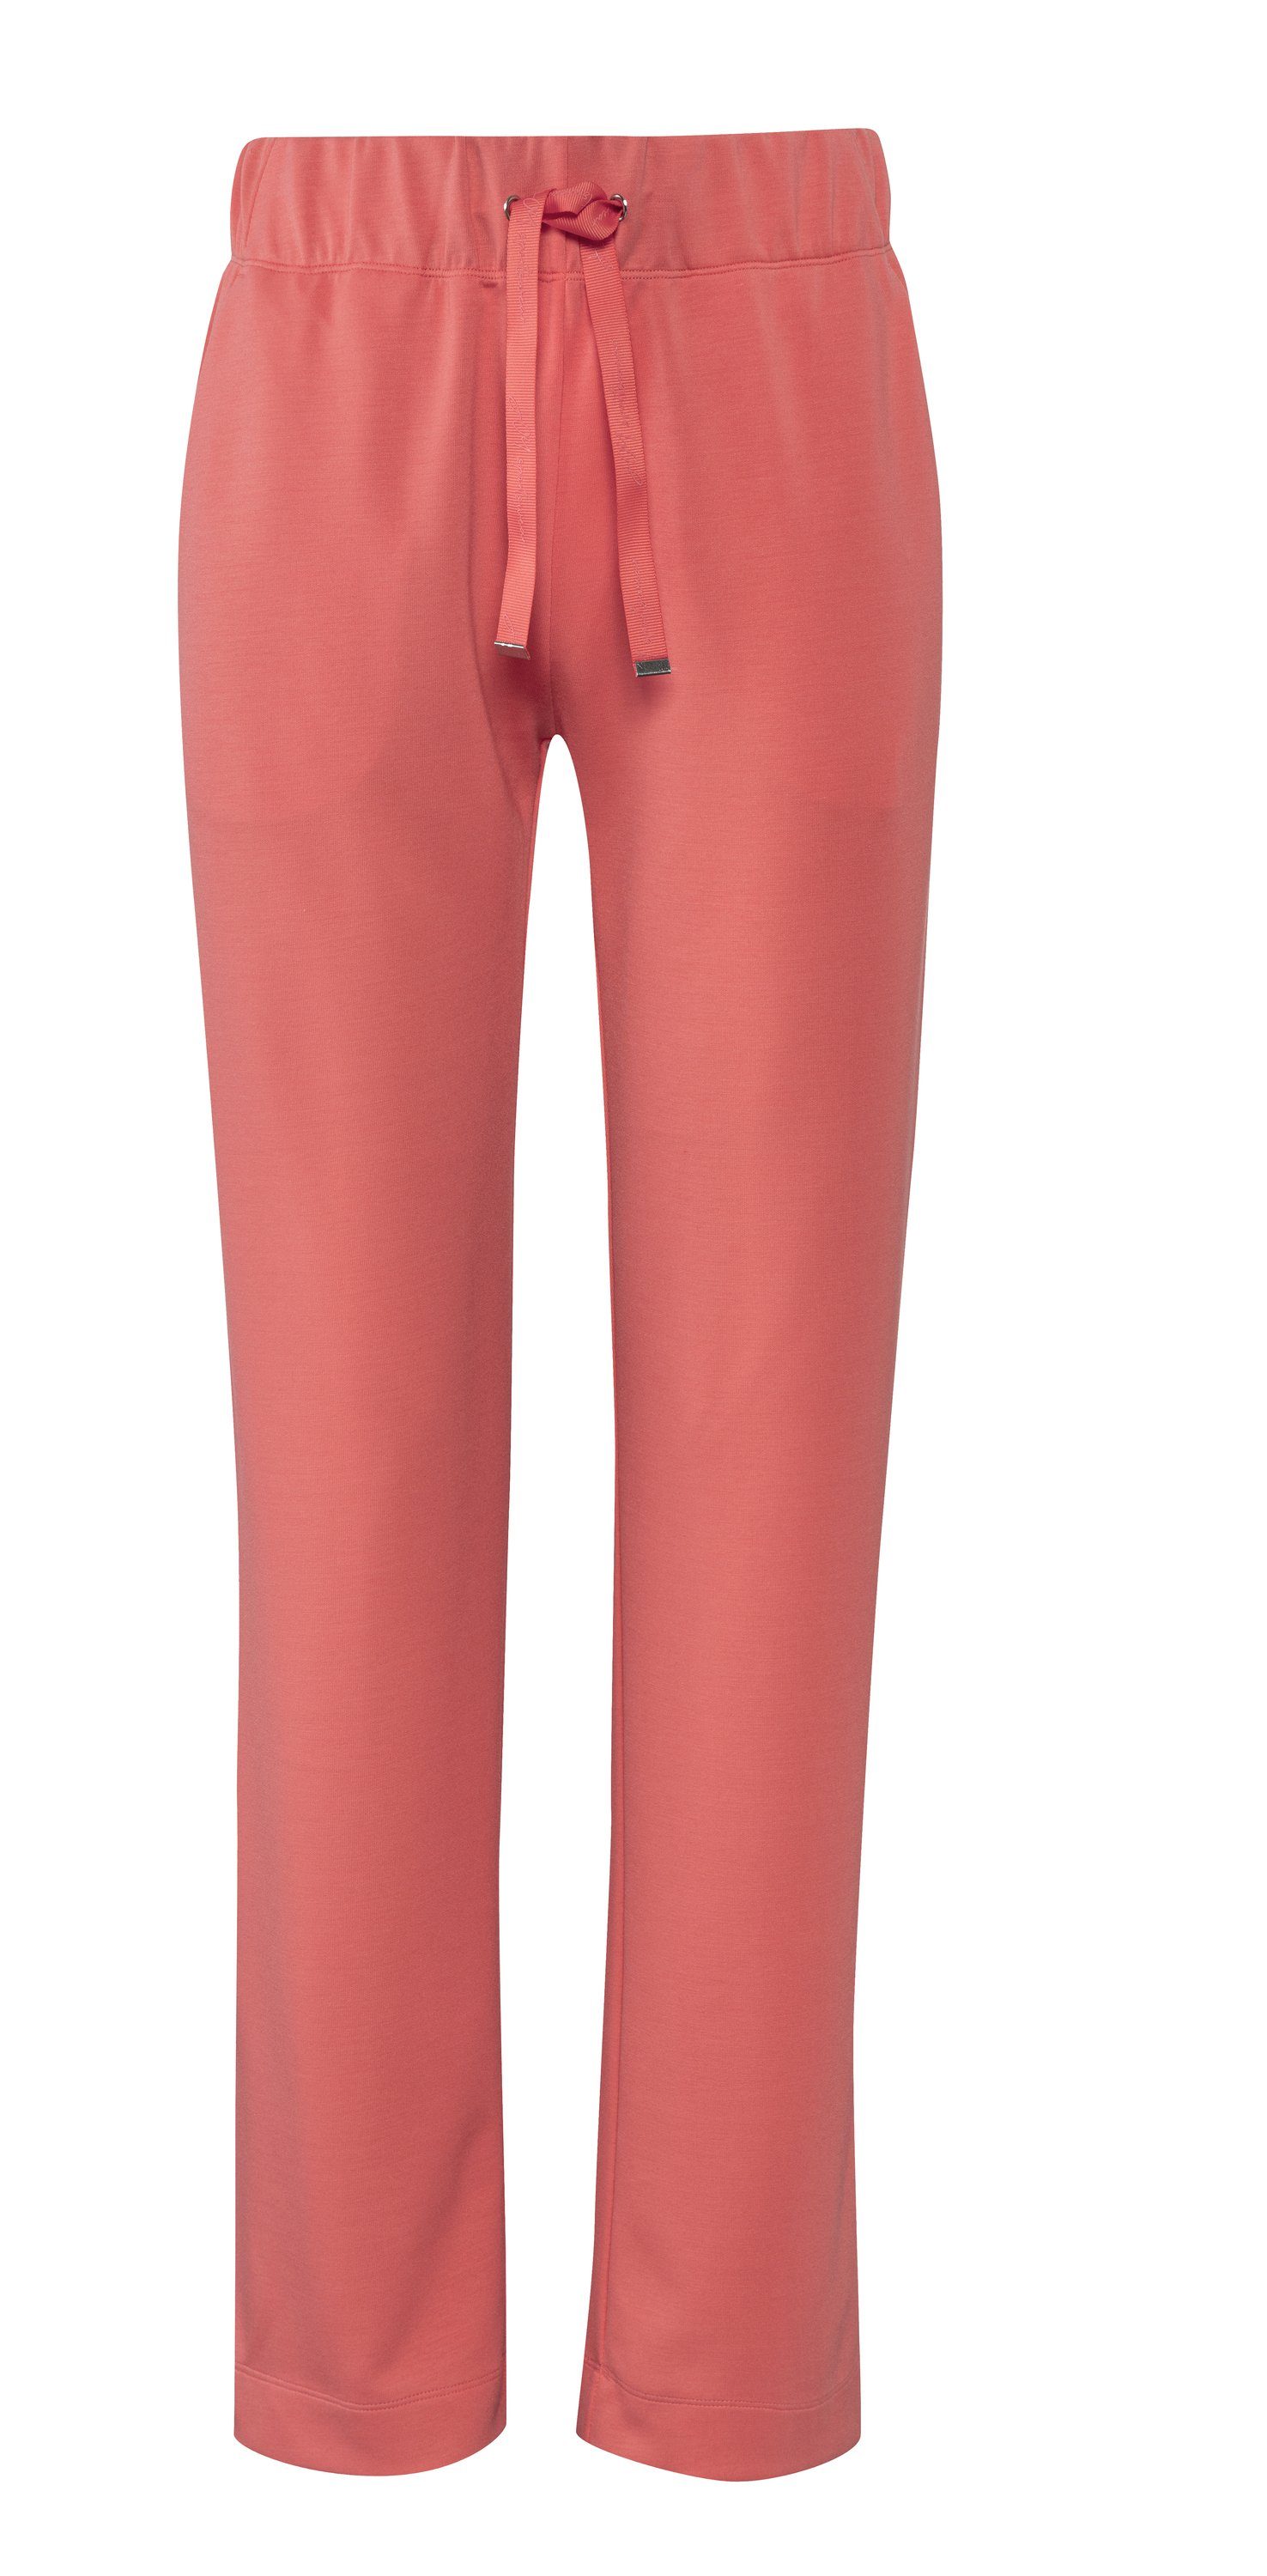 Hose coral Sporthose pink AURORA Joy Sportswear